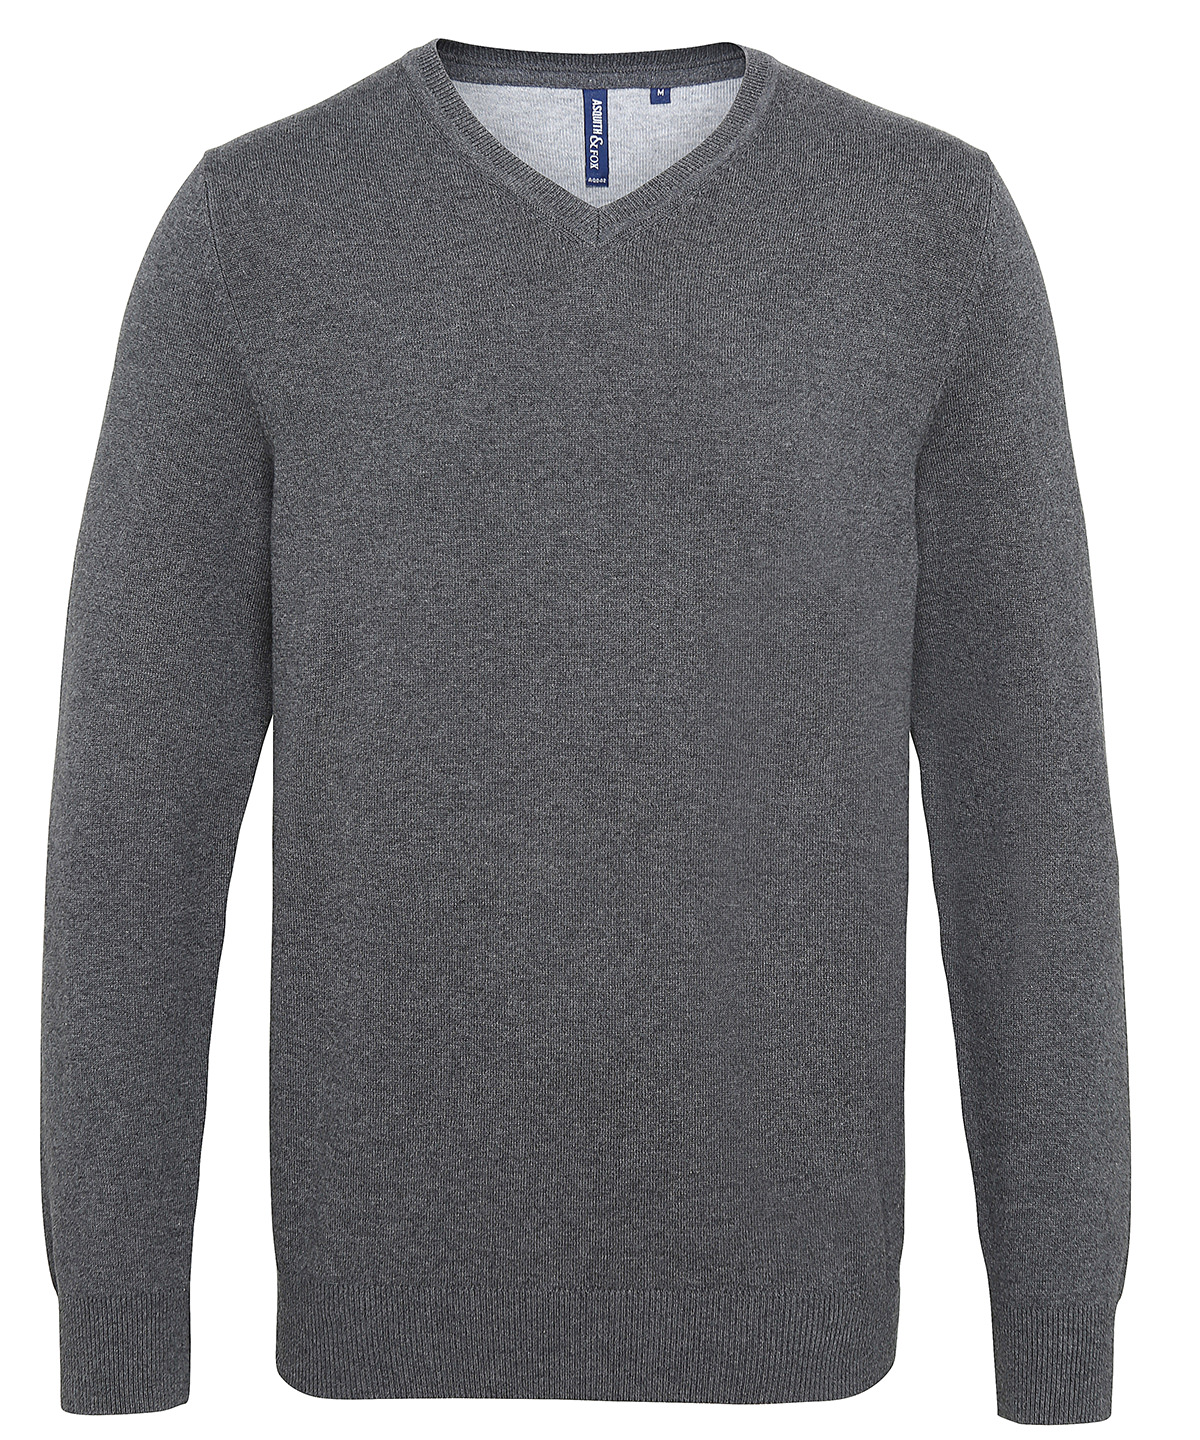 Mens Cotton Blend V-Neck Sweater Charcoal Size 3XLarge